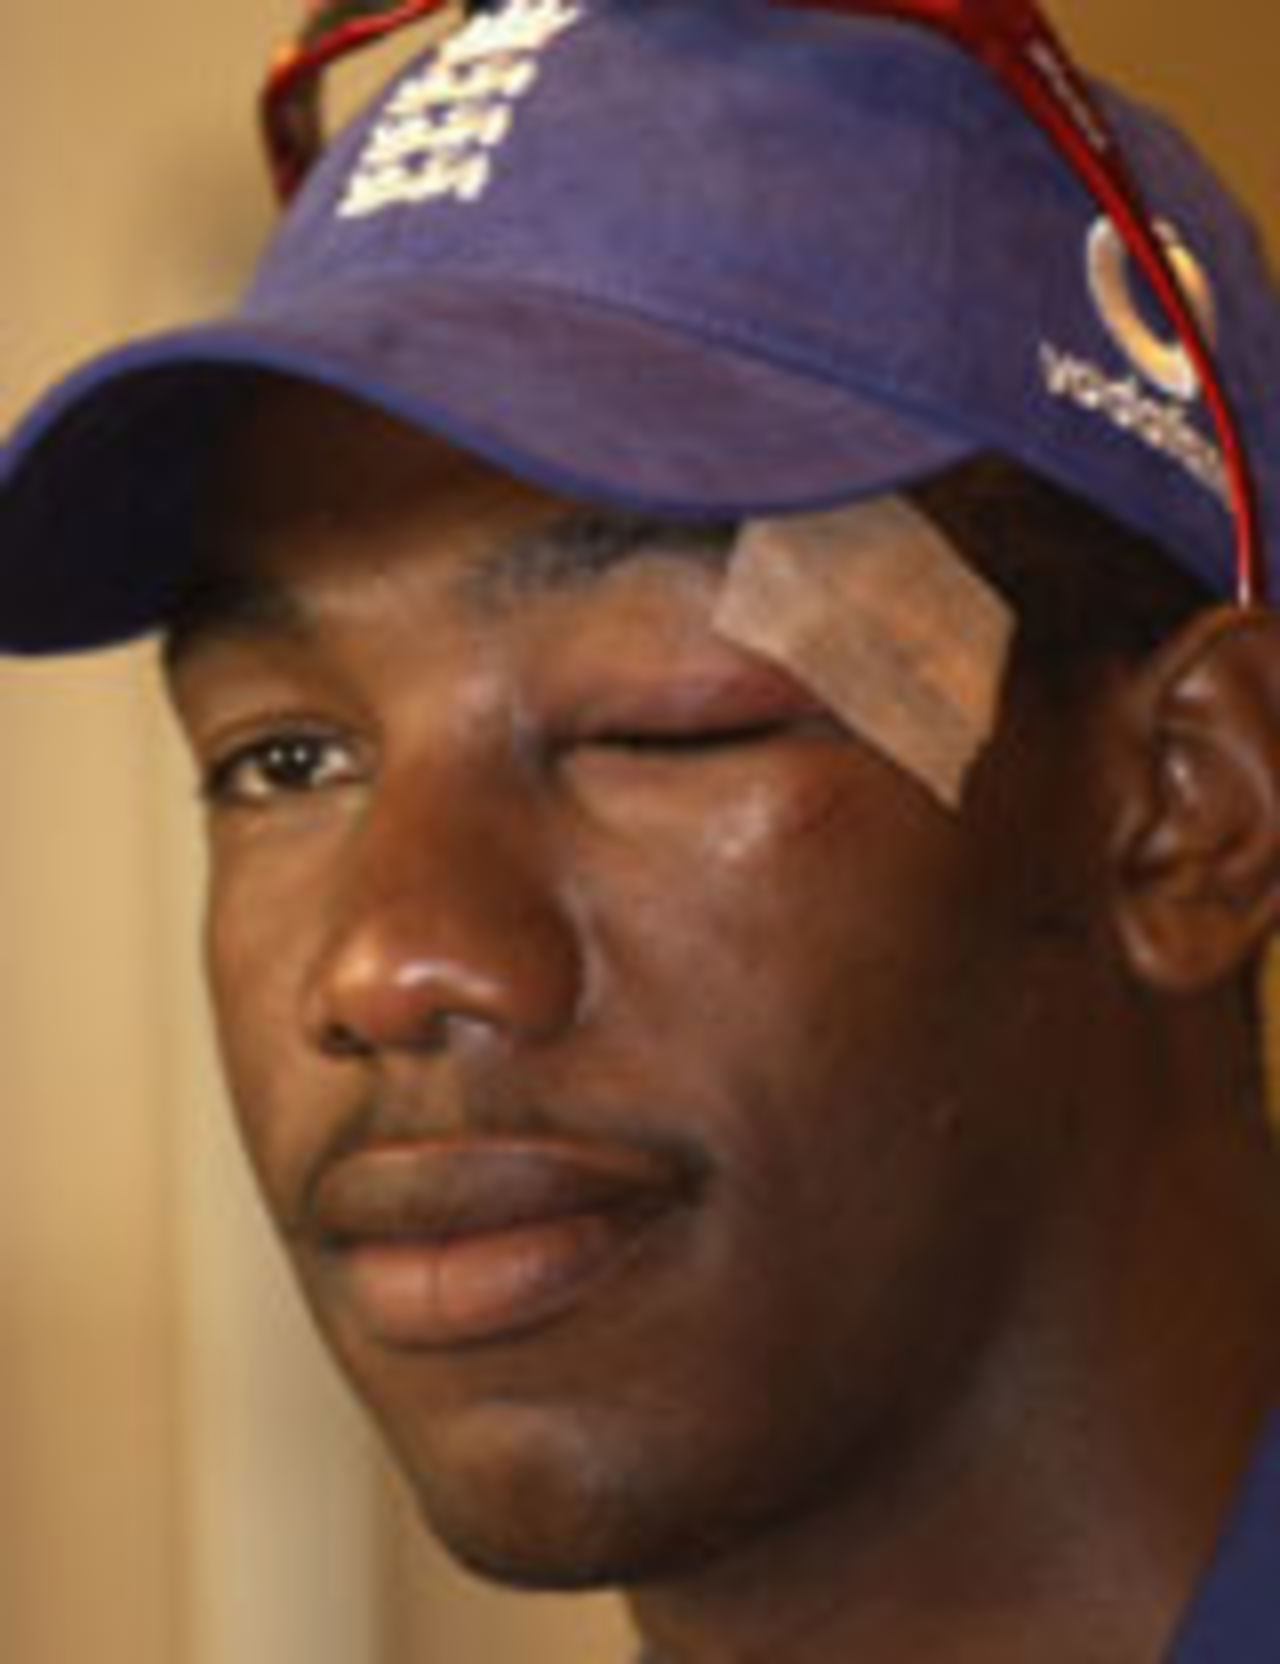 Alex Tudor nursing his eye injury, Perth, December 2, 2002